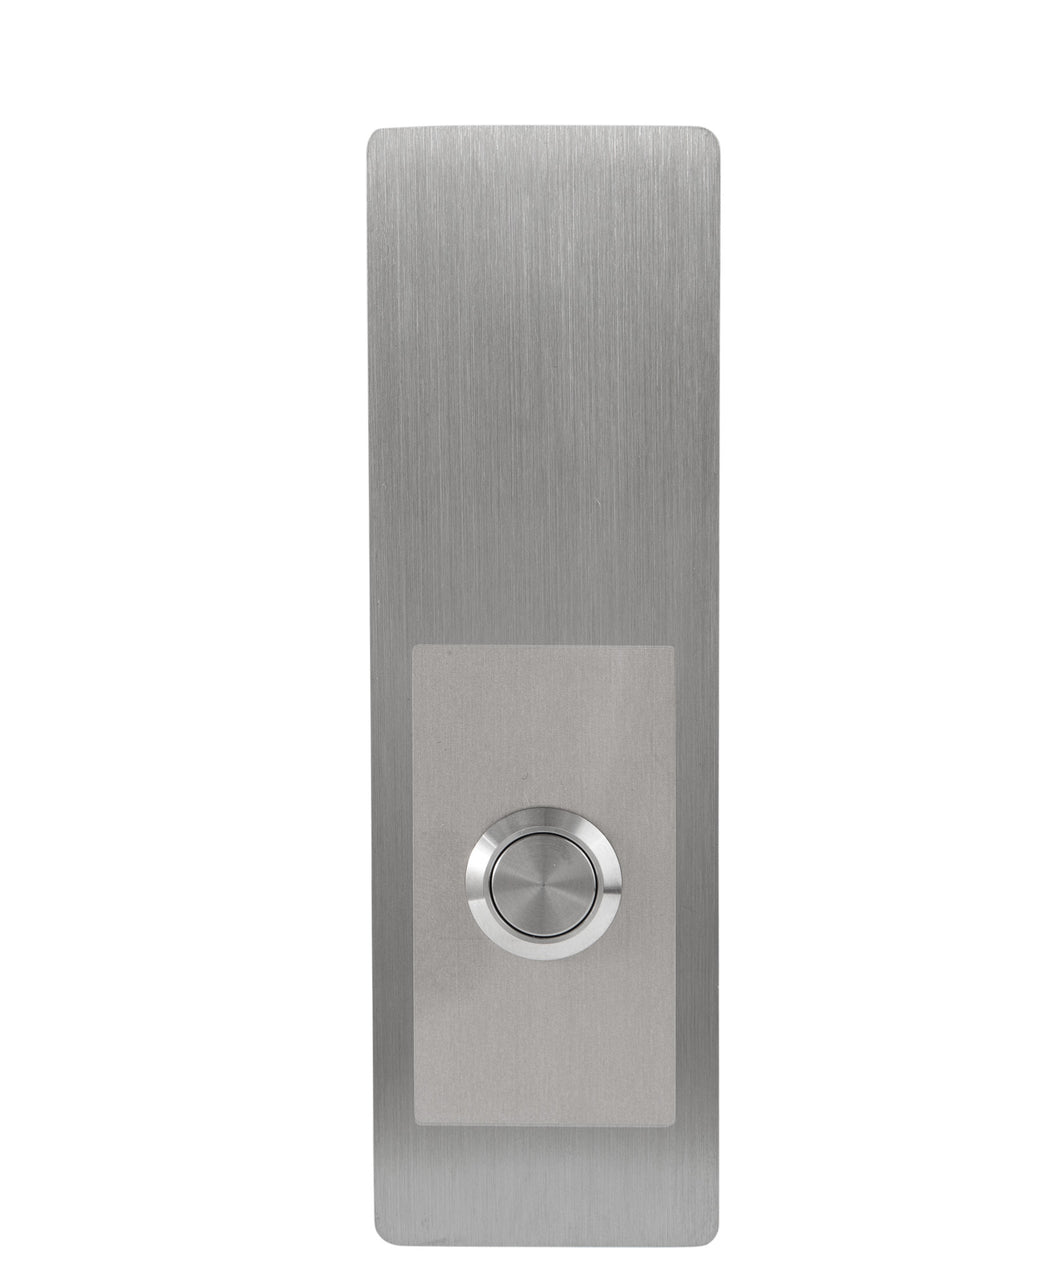 R5 Doorbell | Modern Stainless Hardware Flush Mount Doorbell Replacements